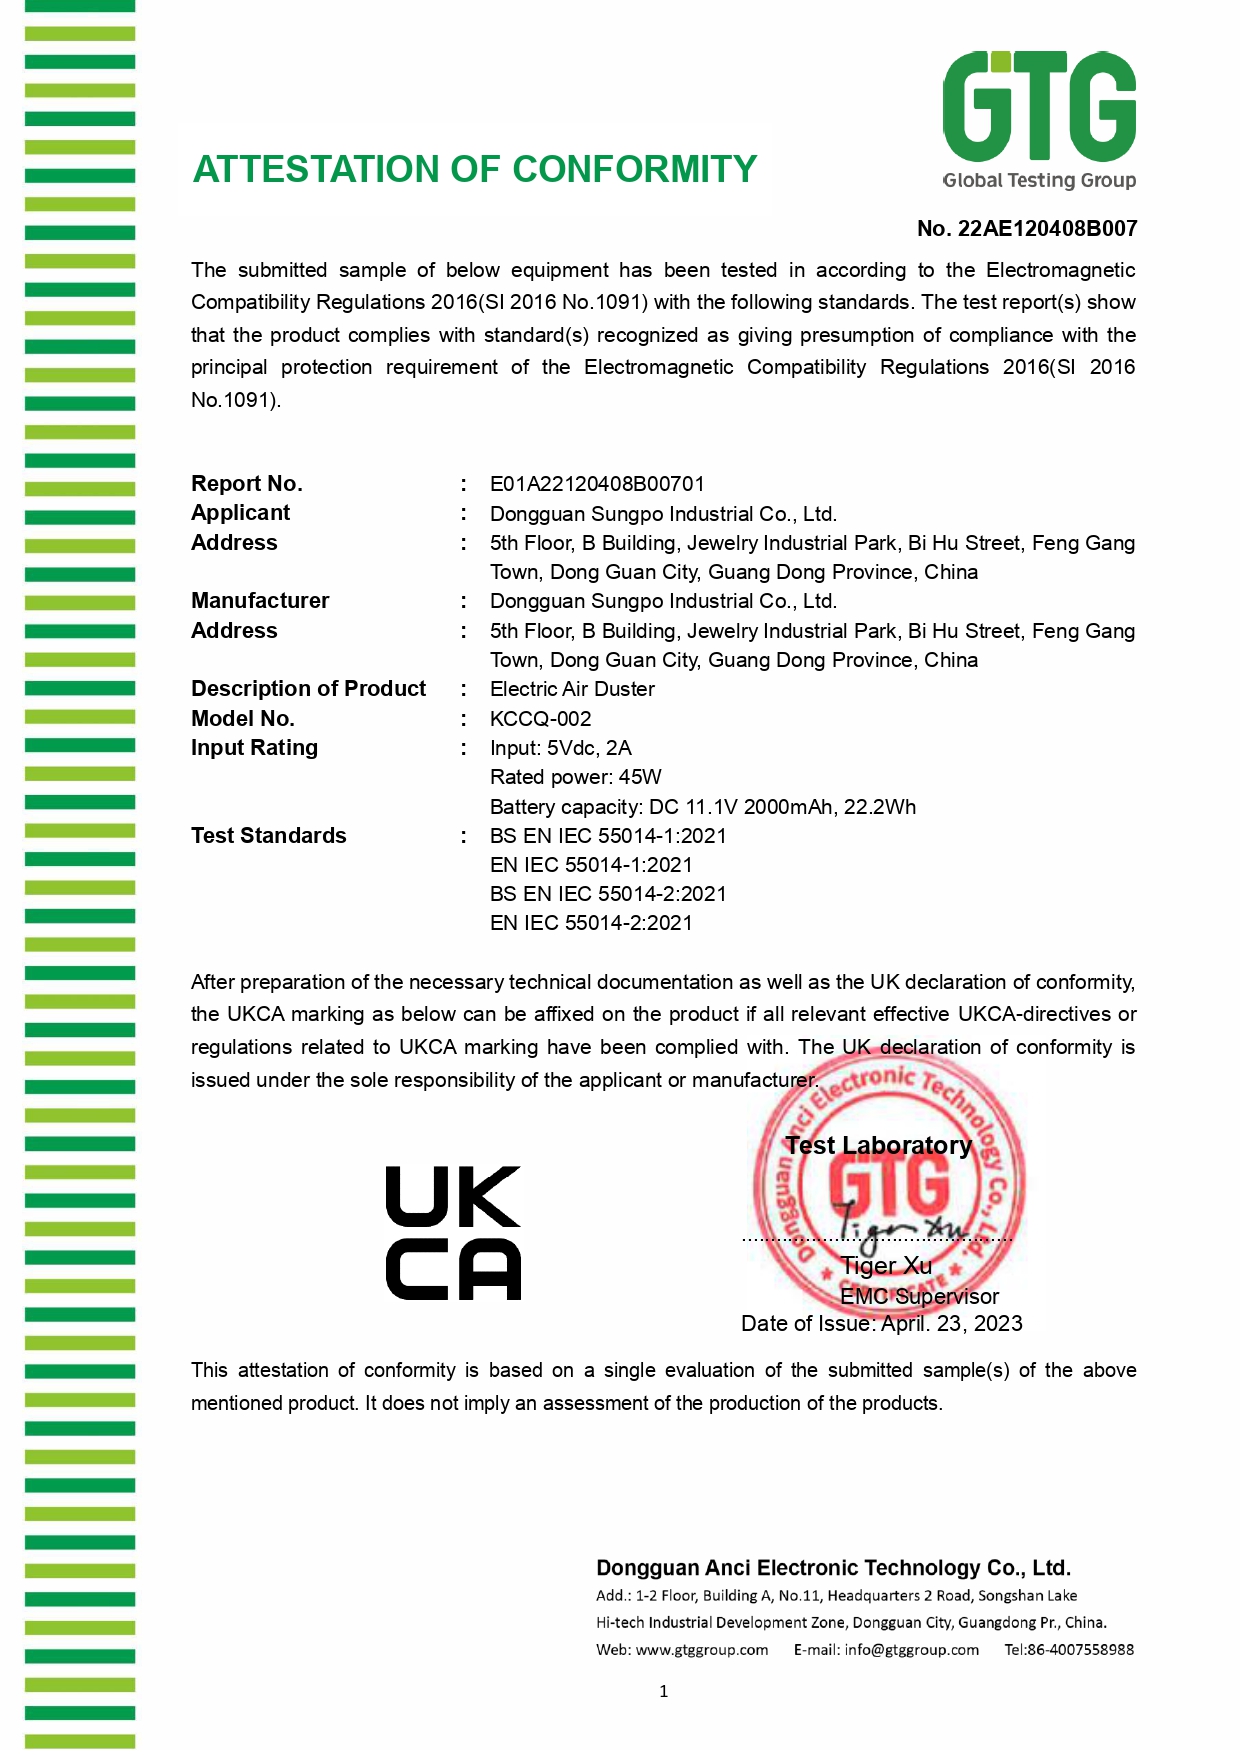 Company Overview of China Massage Gun Manufacturer - Dongguan Sungpo ...